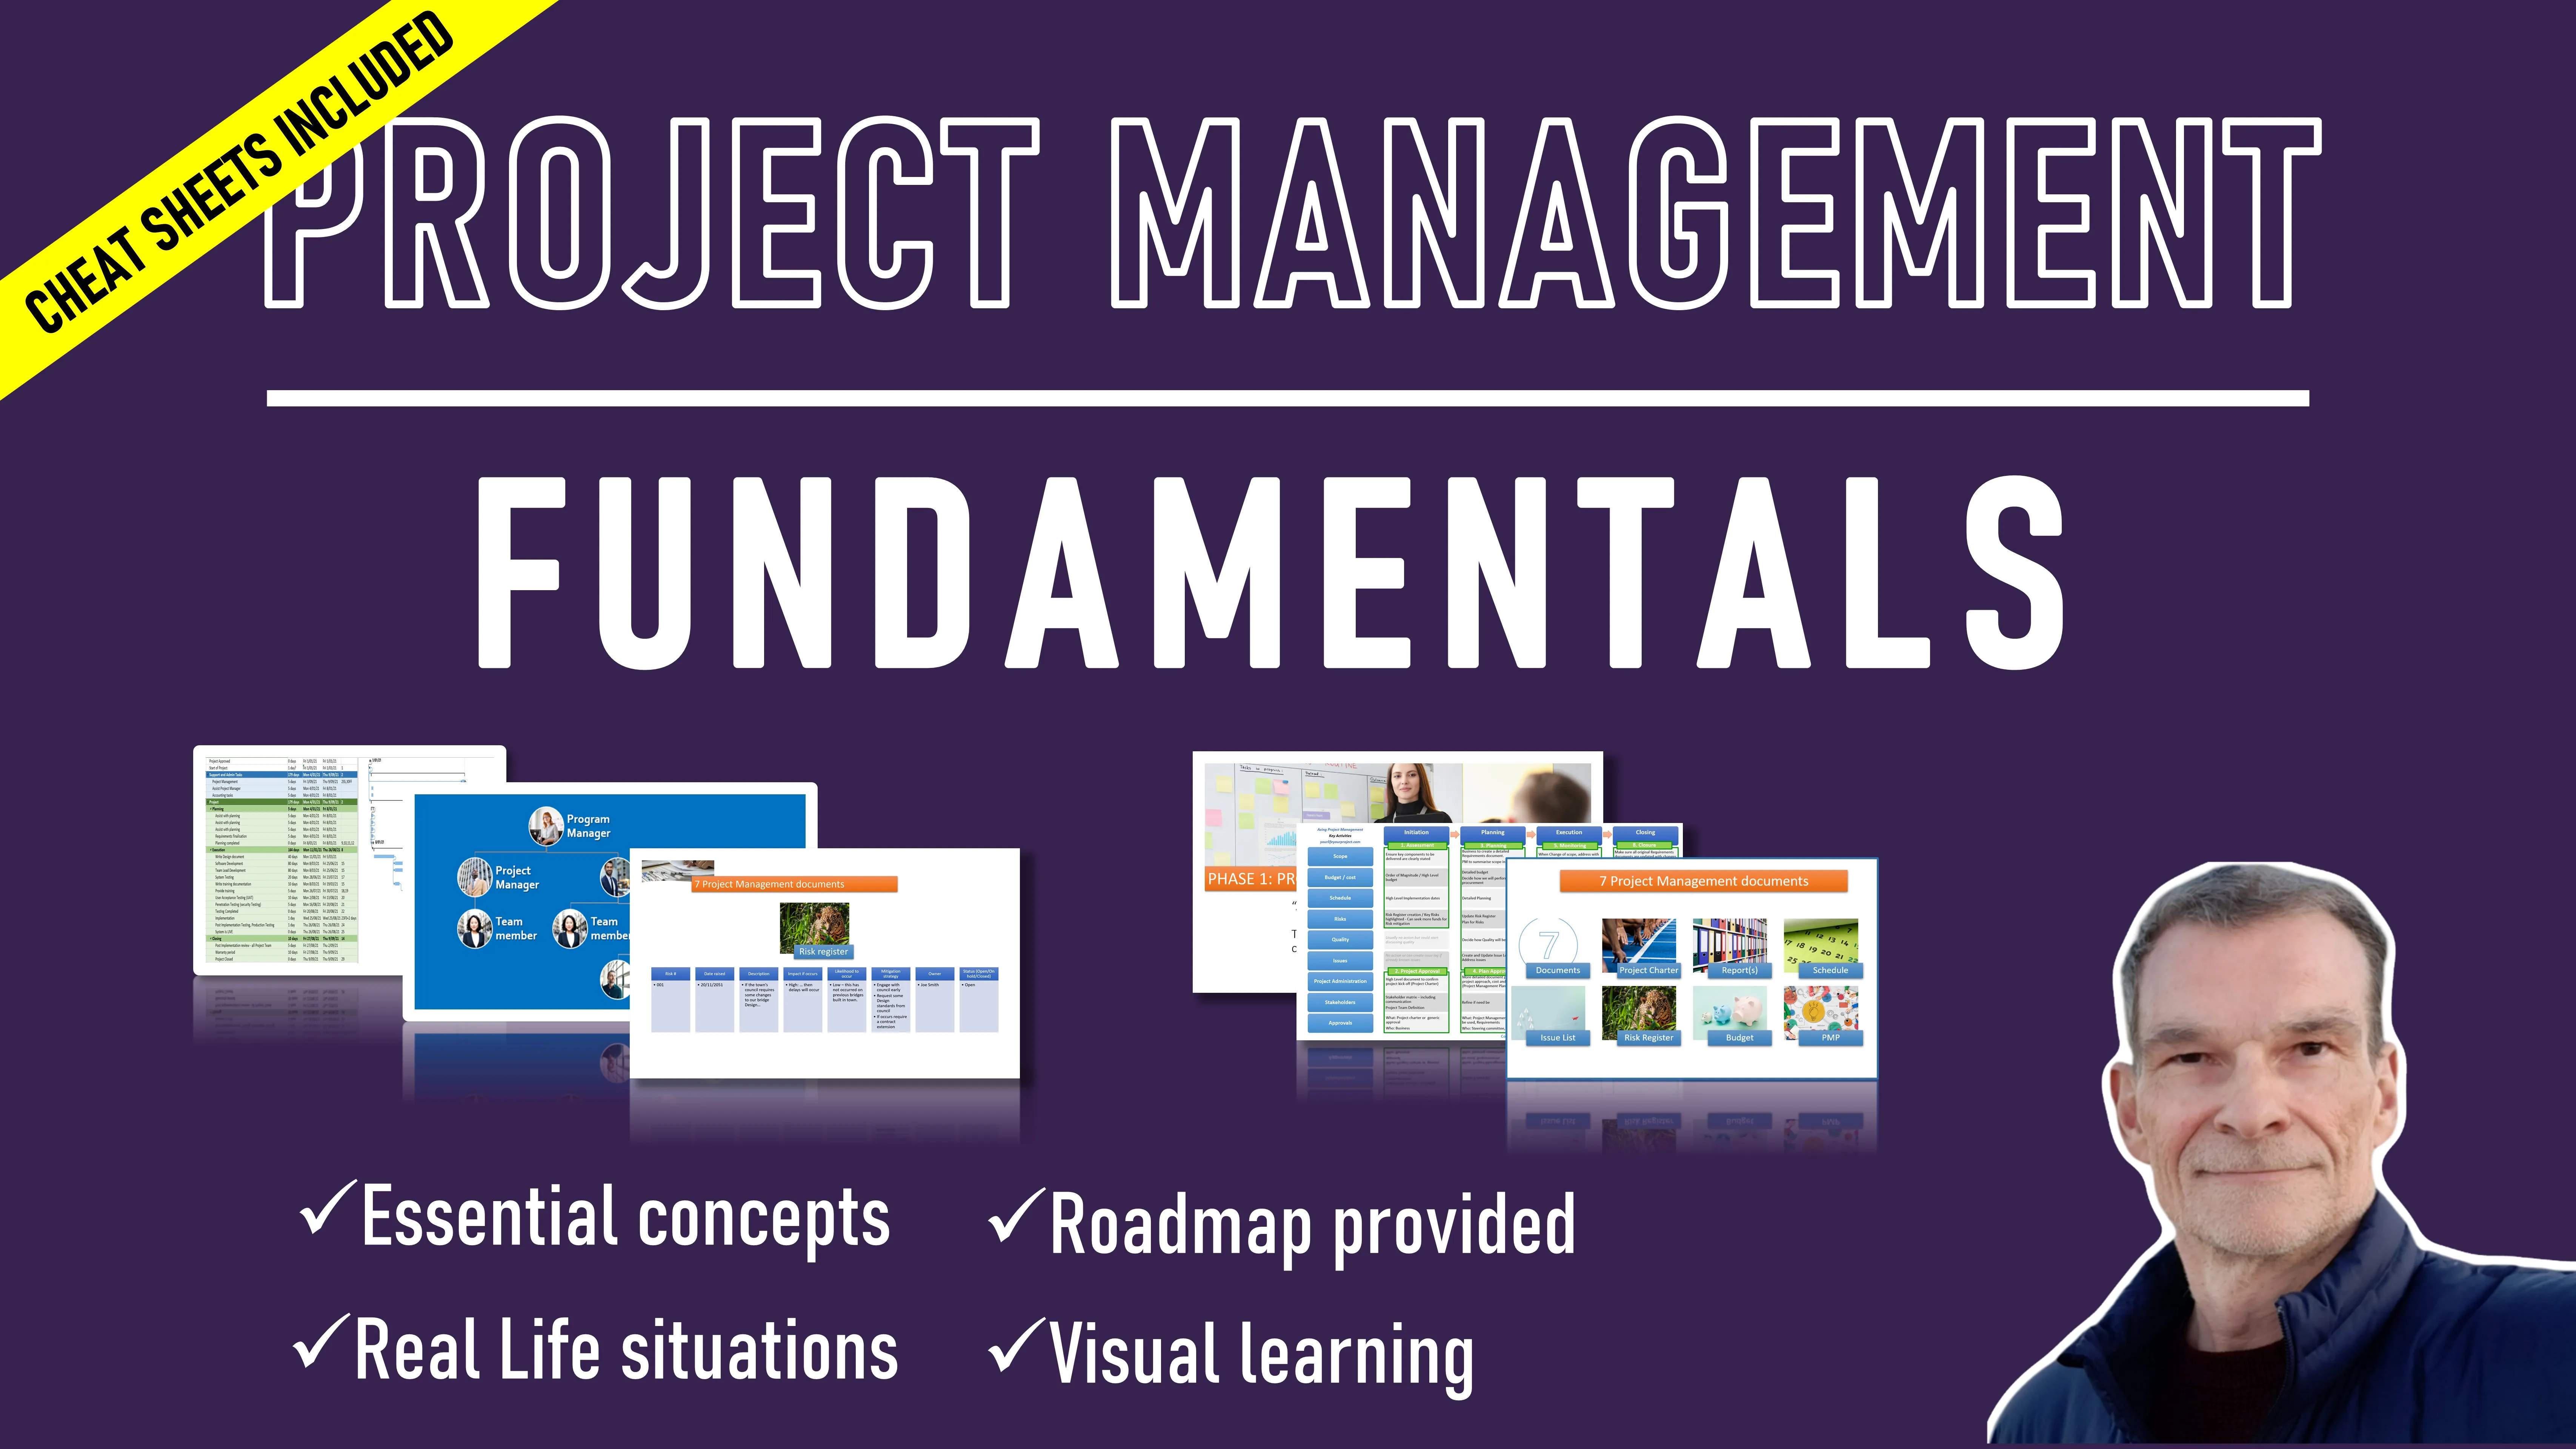 Project Management fundamentals: A practical approach